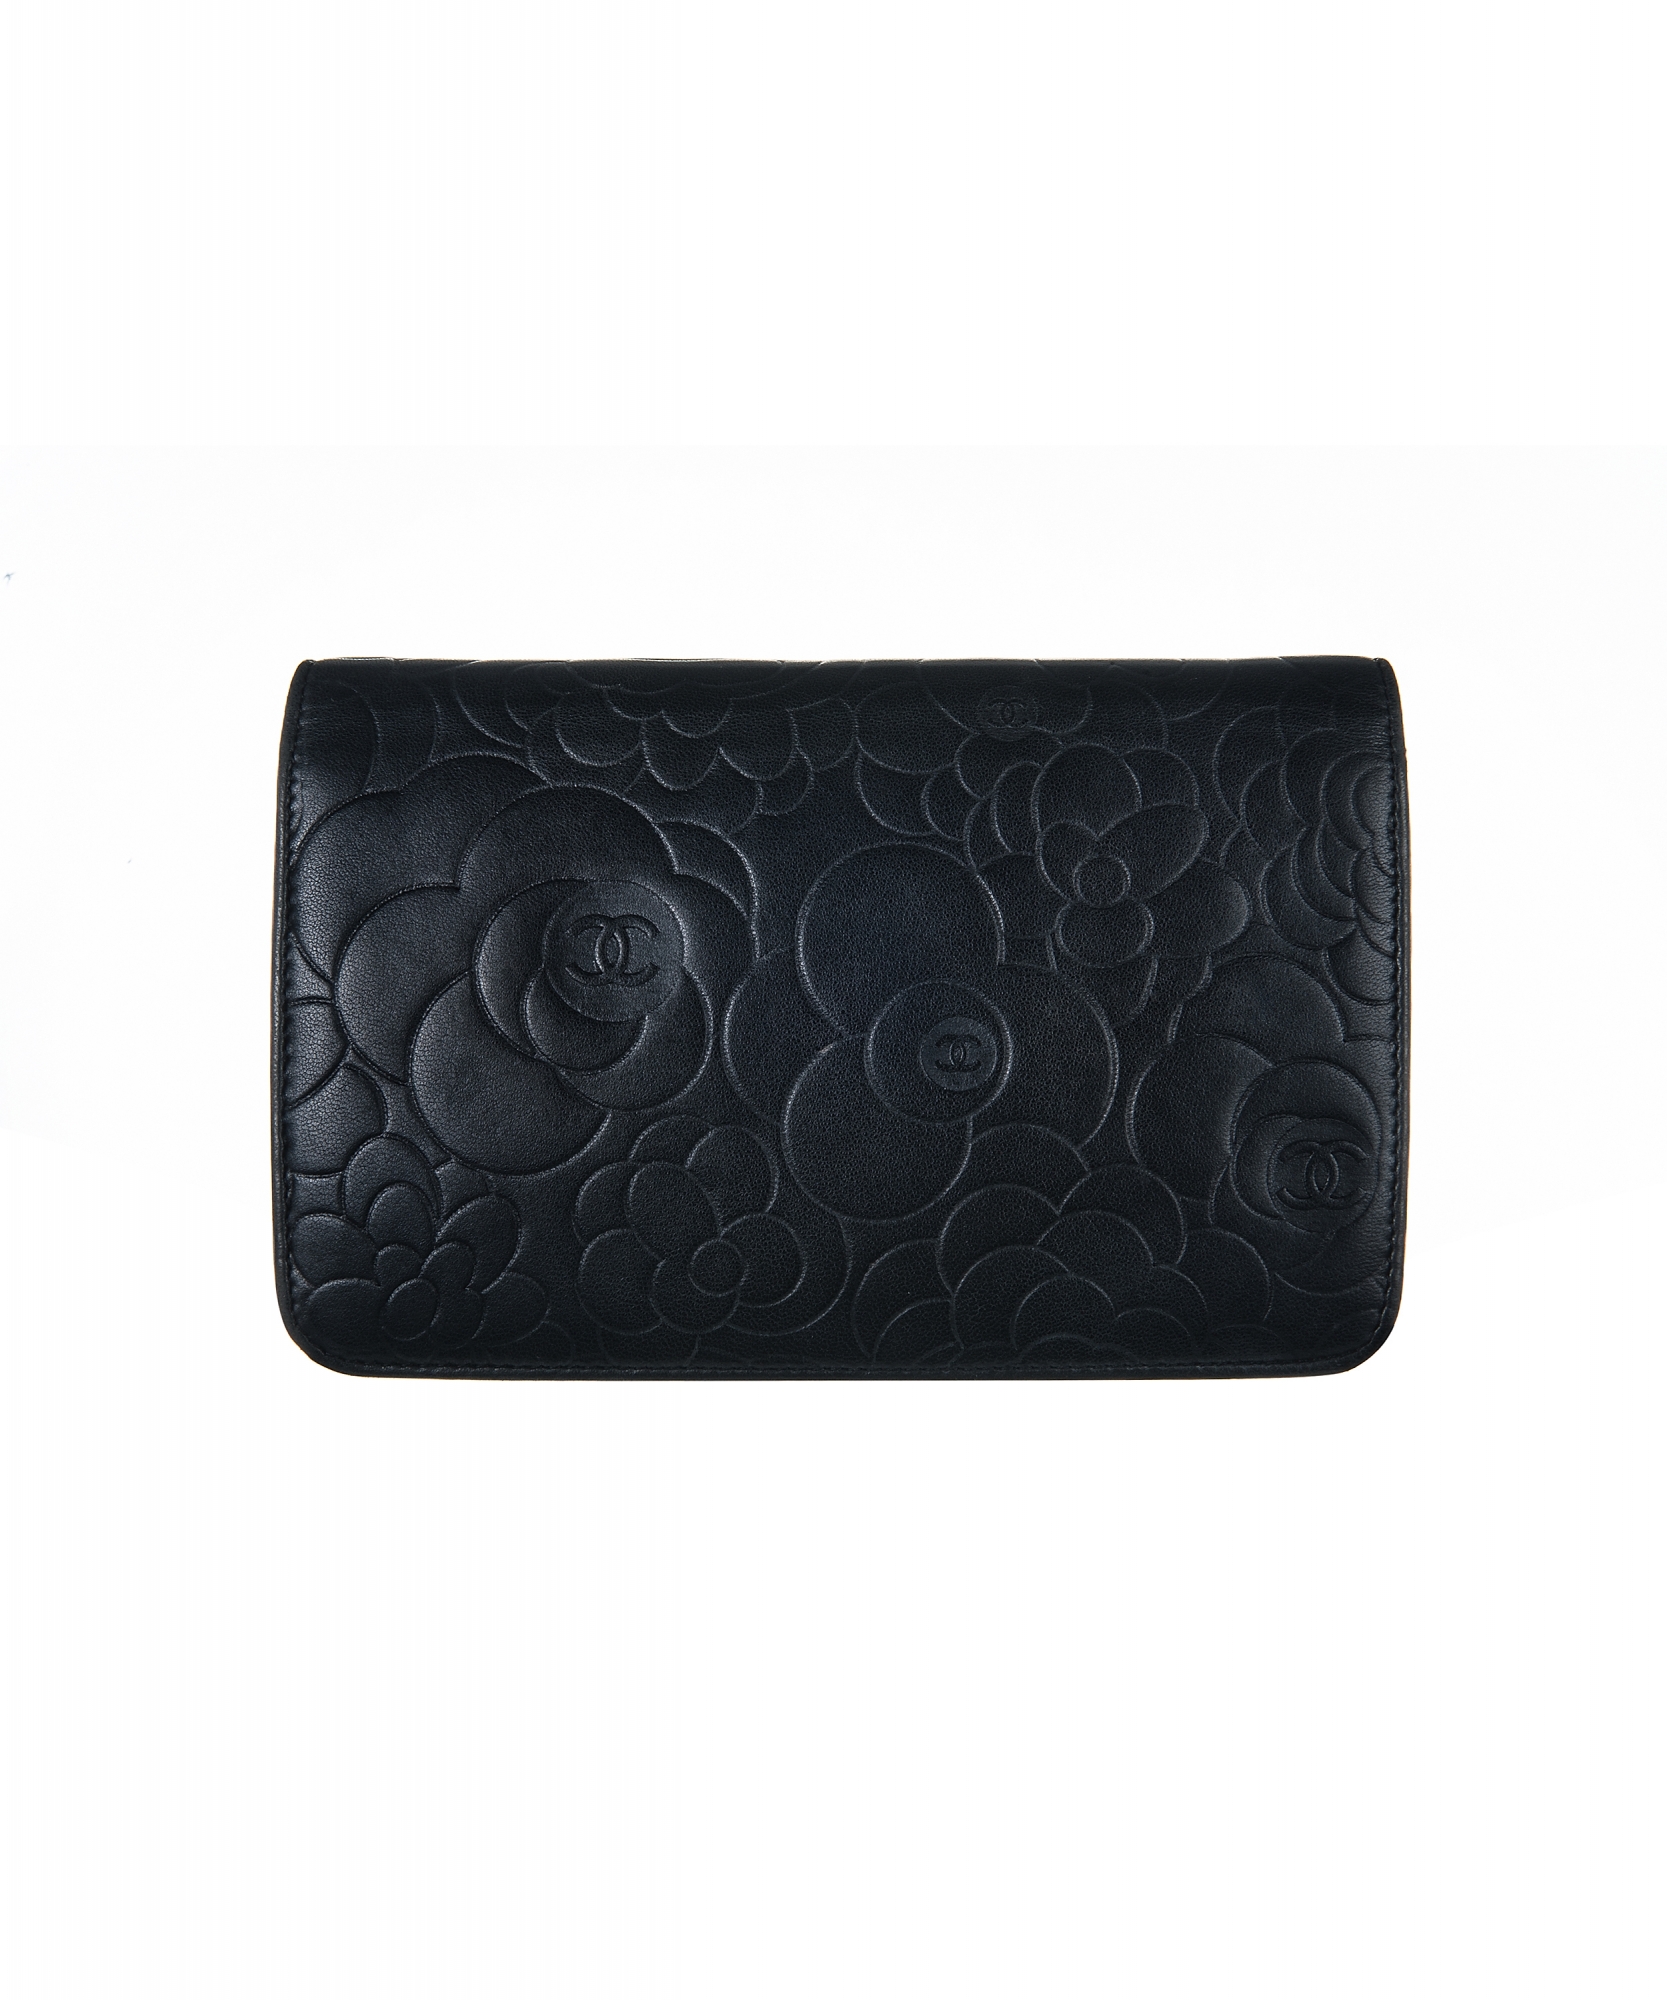 Chanel Camellia Wallet On Chain WOC Bag - Chanel | La Doyenne